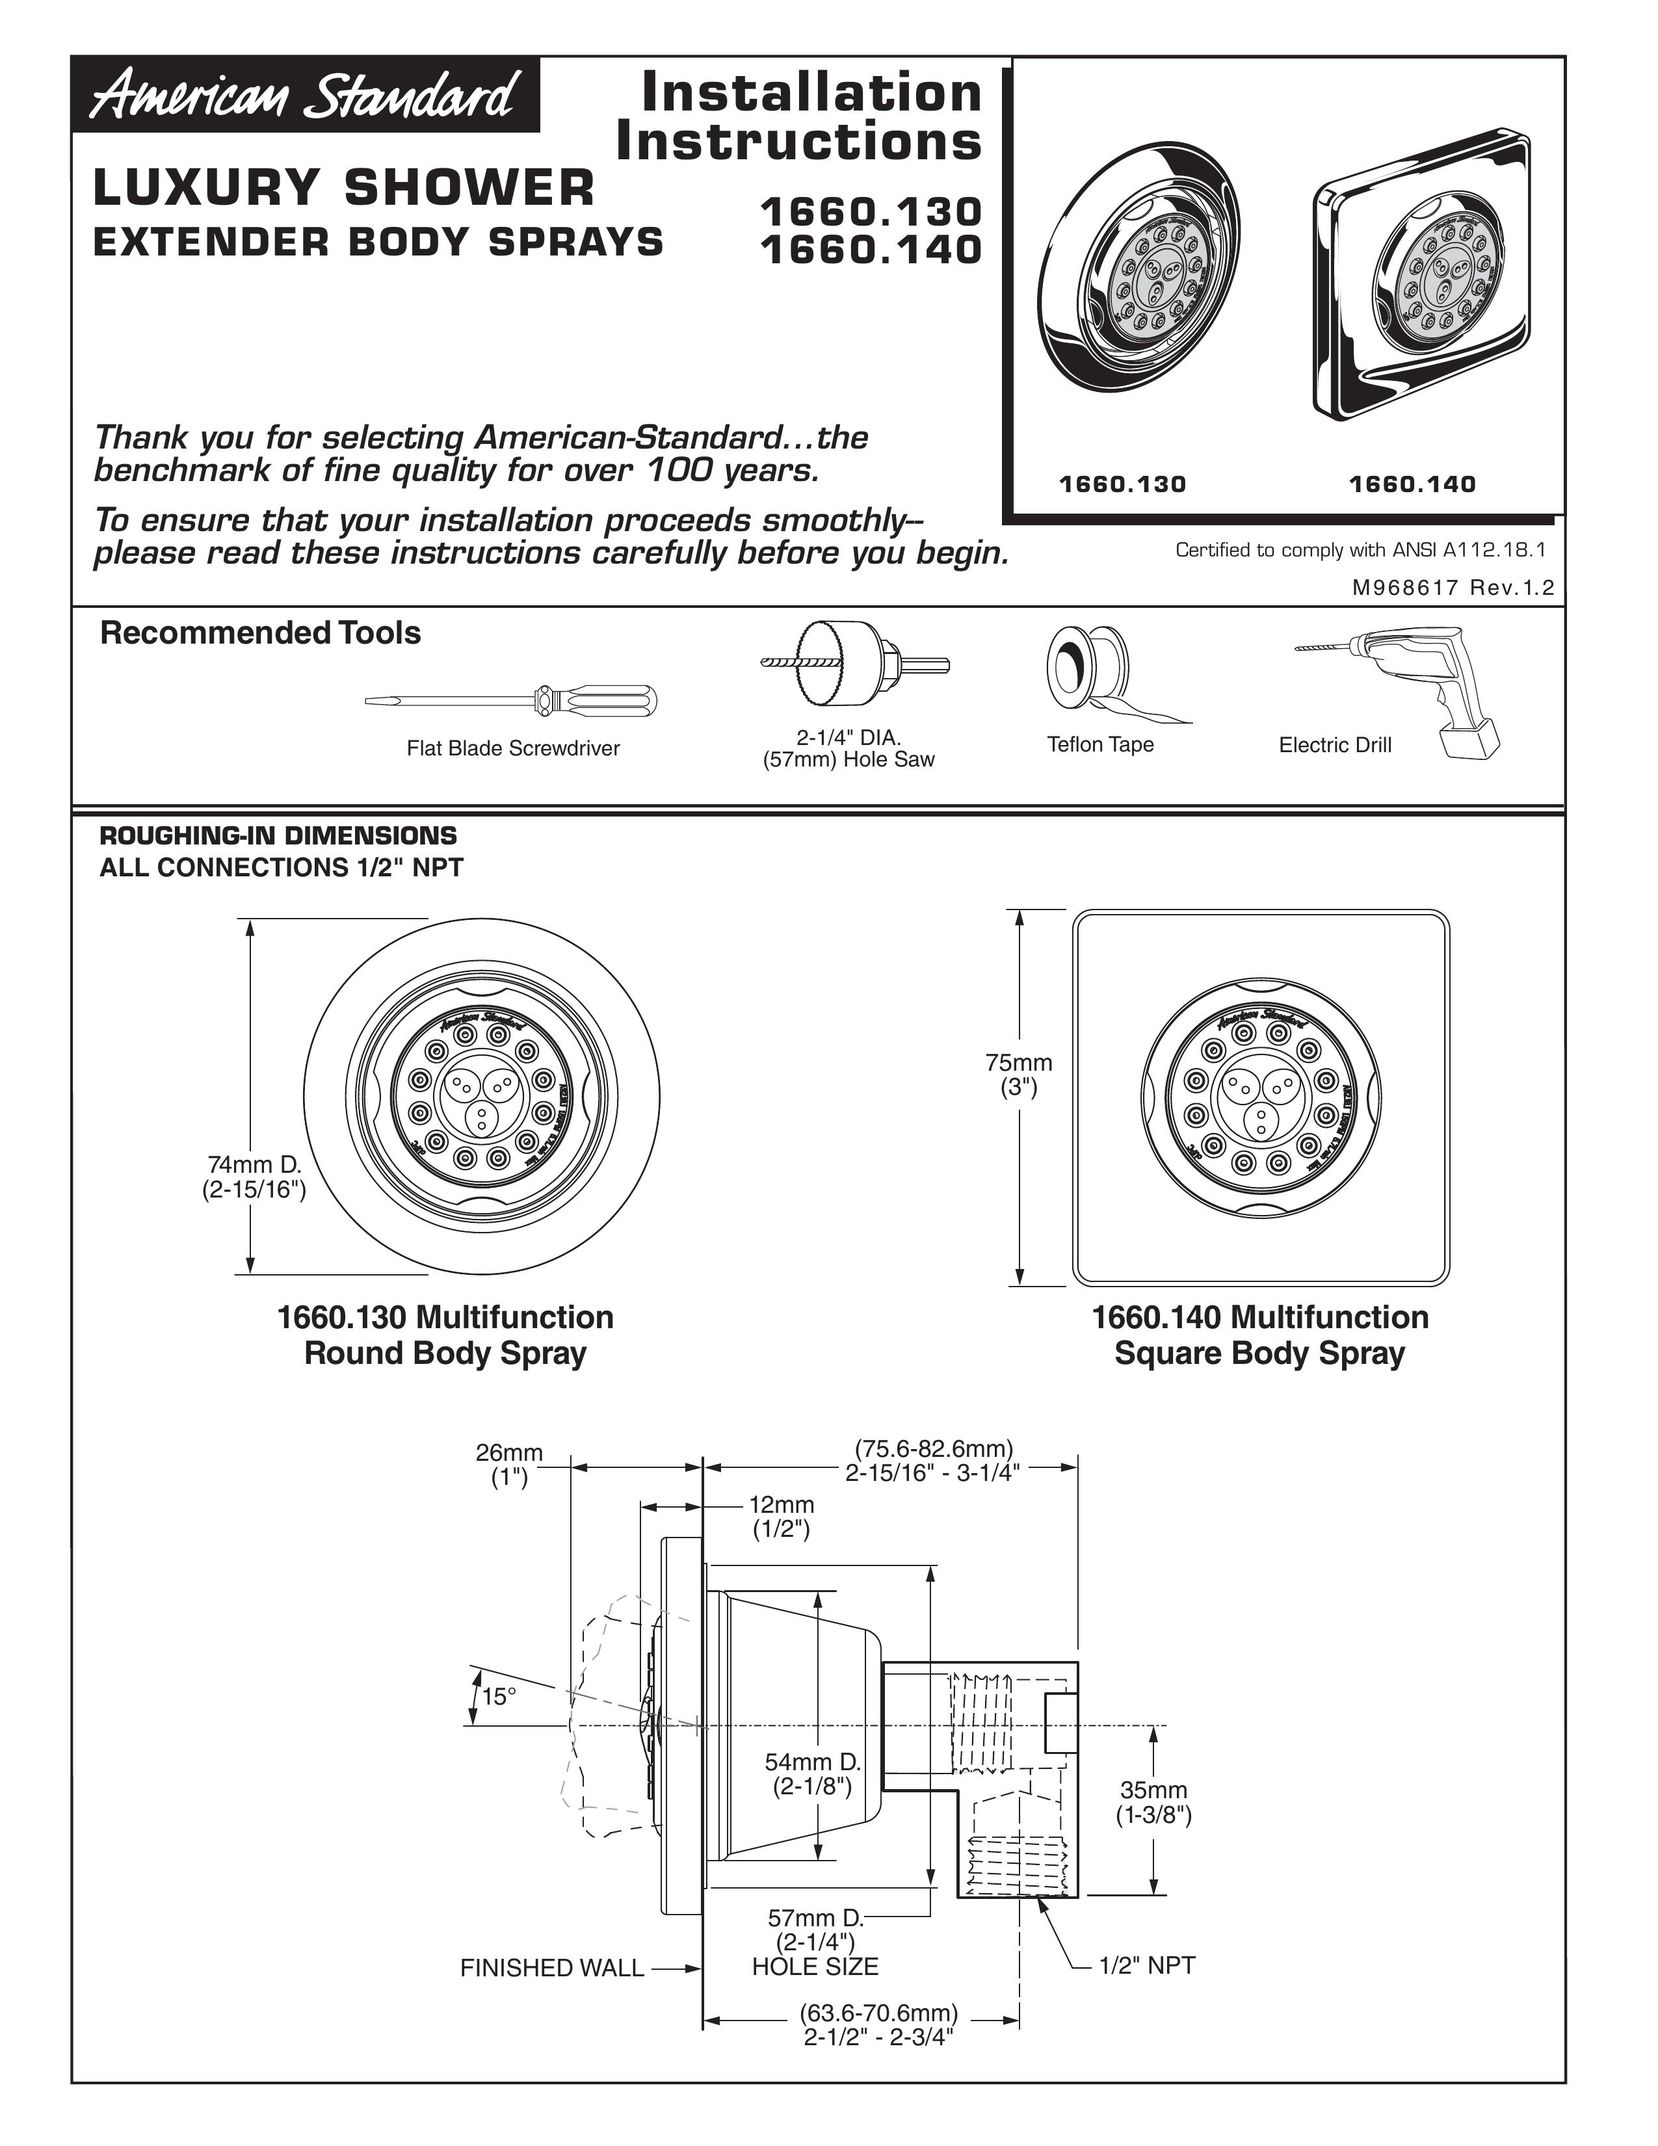 American Standard 1660.14 Plumbing Product User Manual (Page 1)